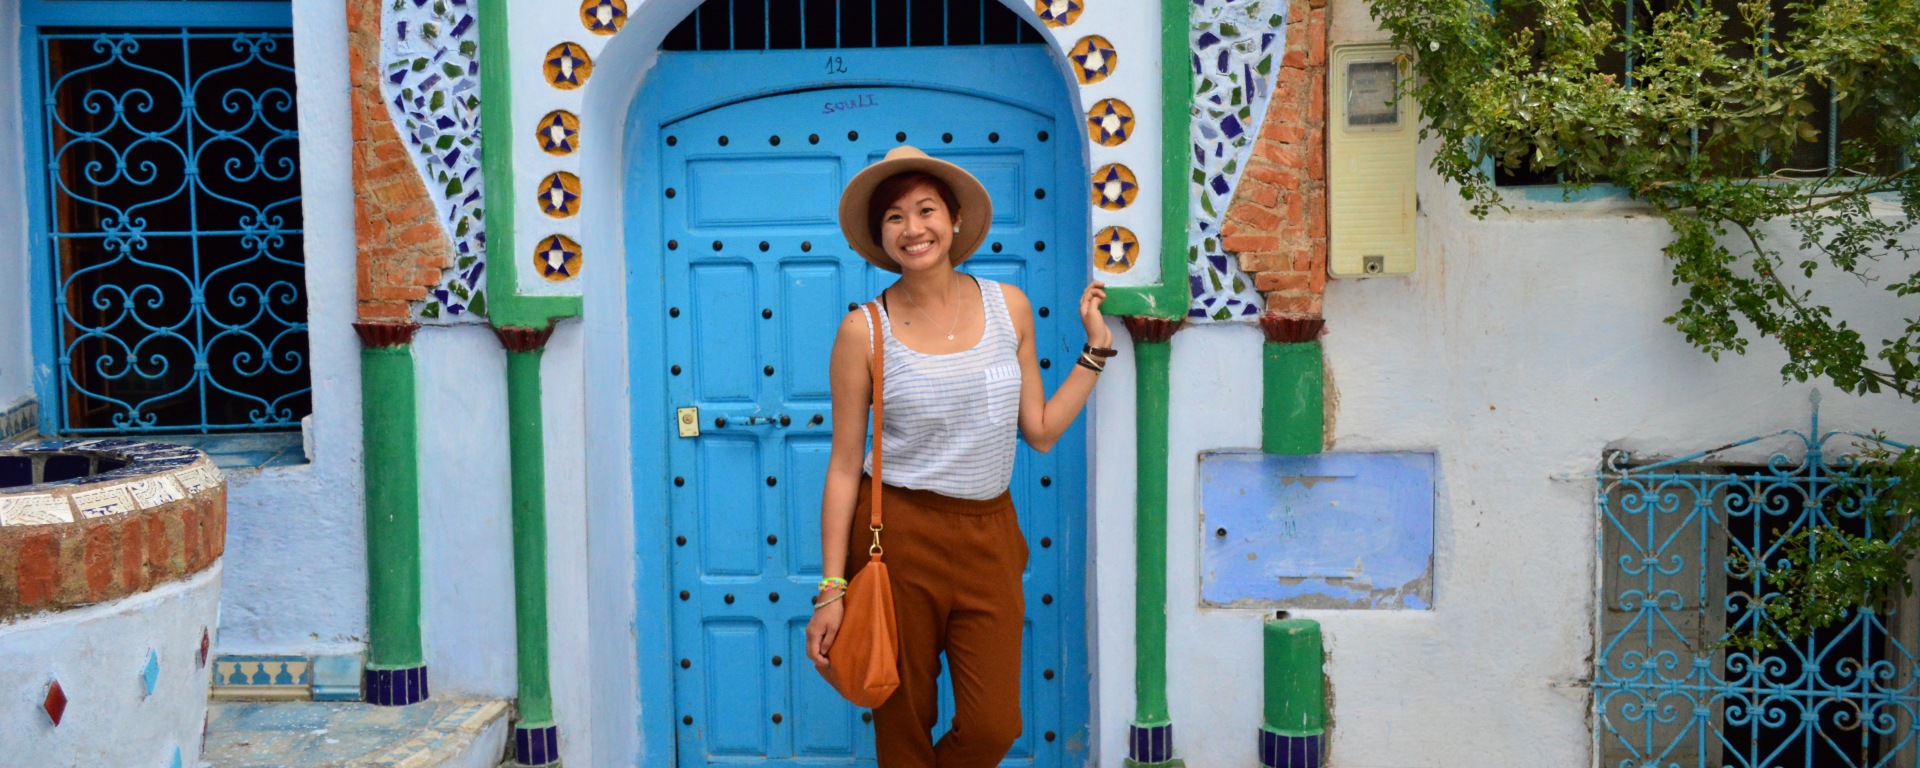 Cassandra in Chefchaouen, Morocco - MissMaps.com Featured Female Traveler